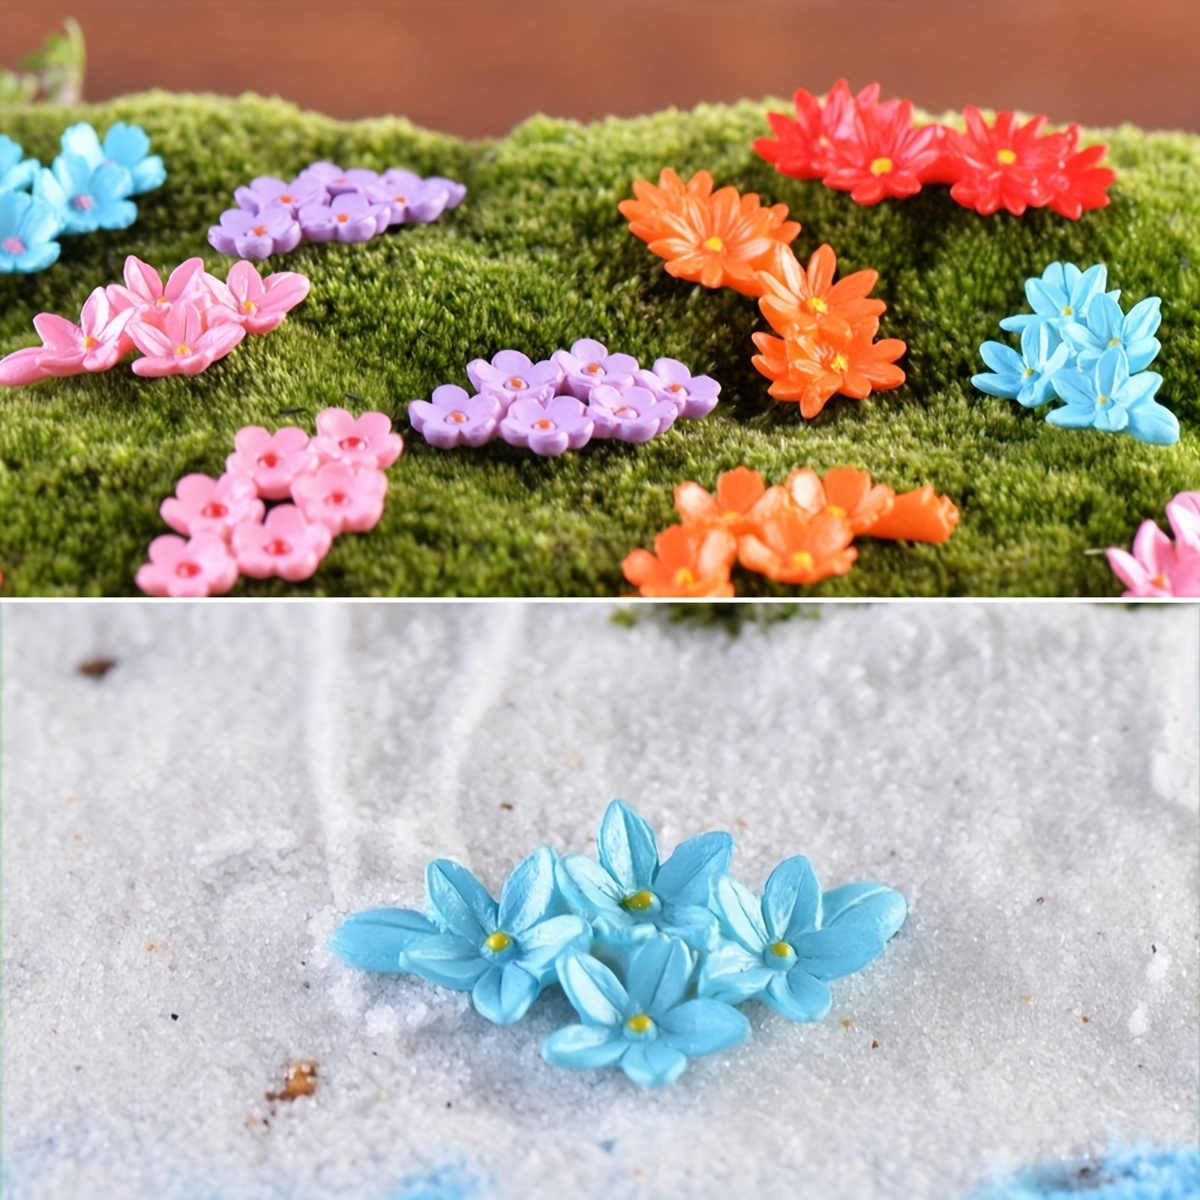 

15pcs Random Style Super Mini Multi-color Simulation Flower Micro Landscape Fairy Garden Ornaments Diy Accessories For Garden Home Bonsai Decoration